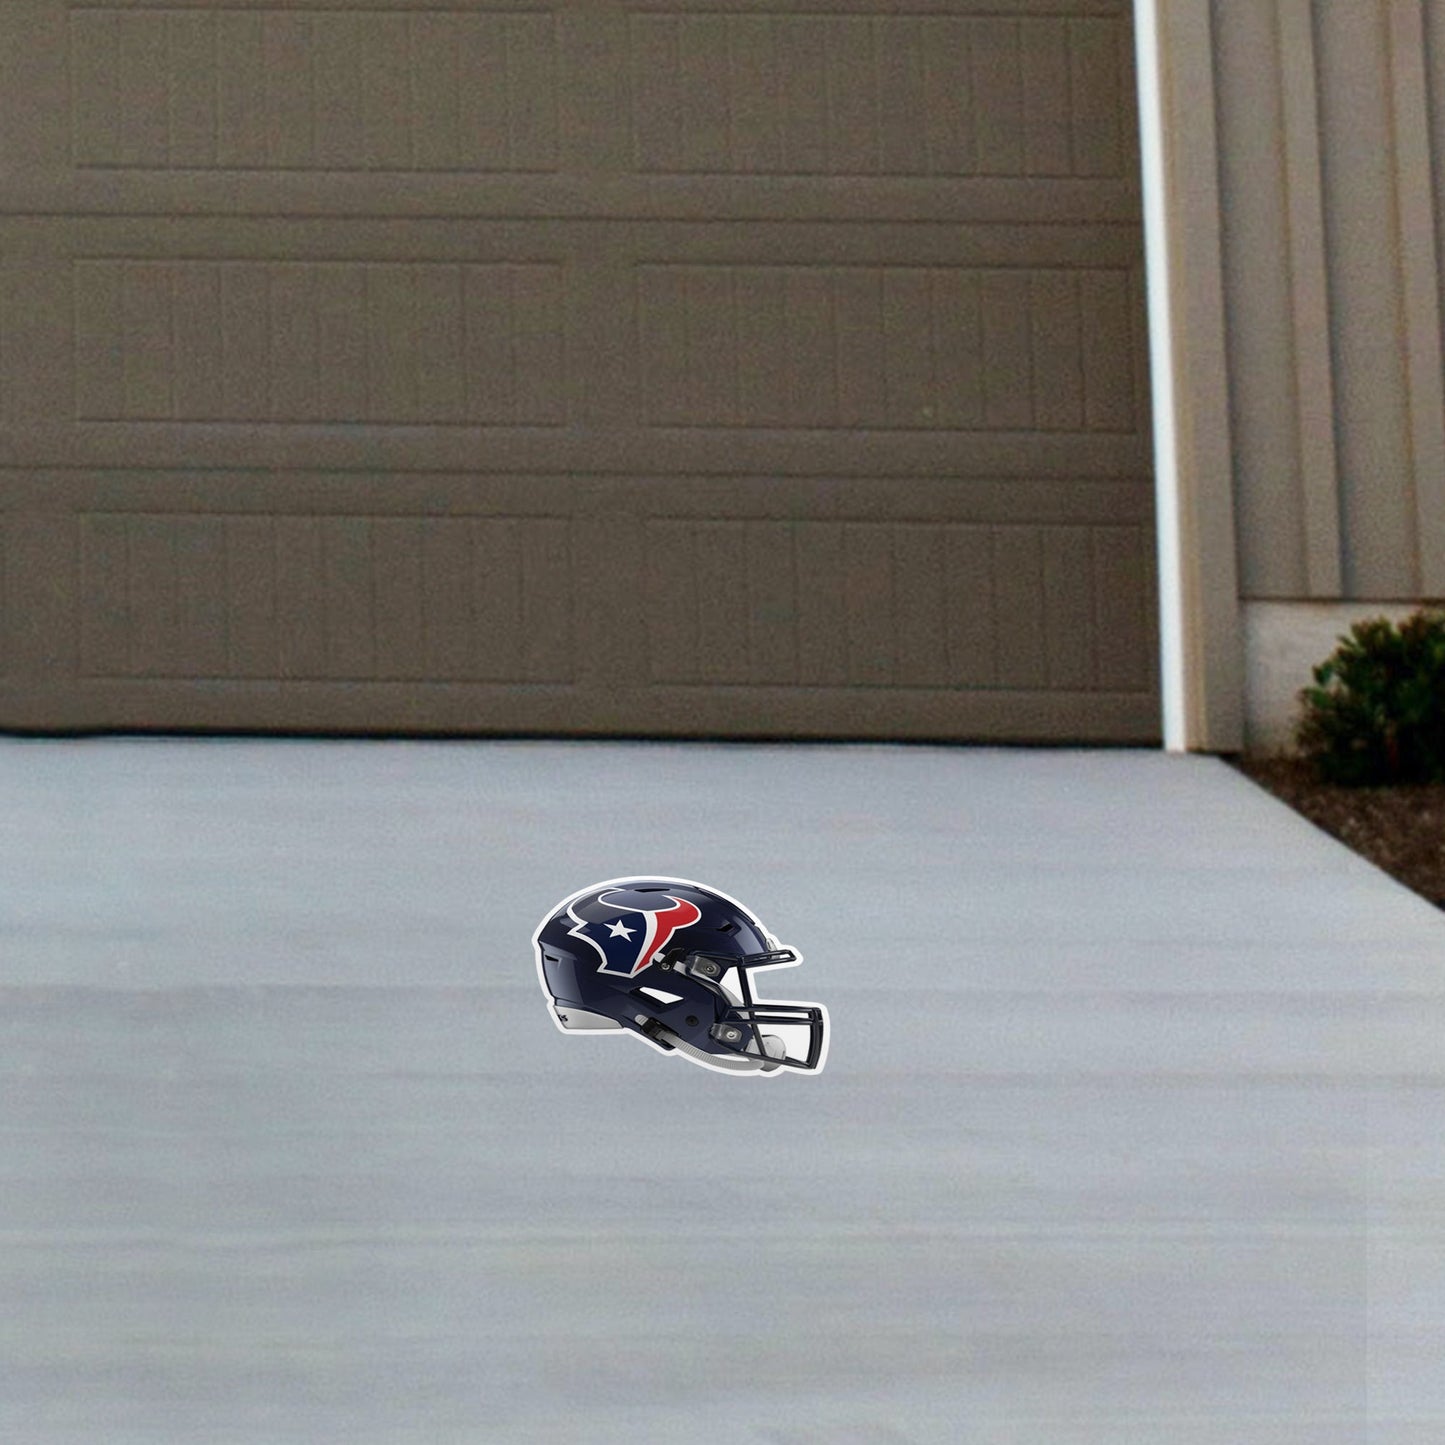 Houston Texans: Outdoor Helmet - Officially Licensed NFL Outdoor Graphic